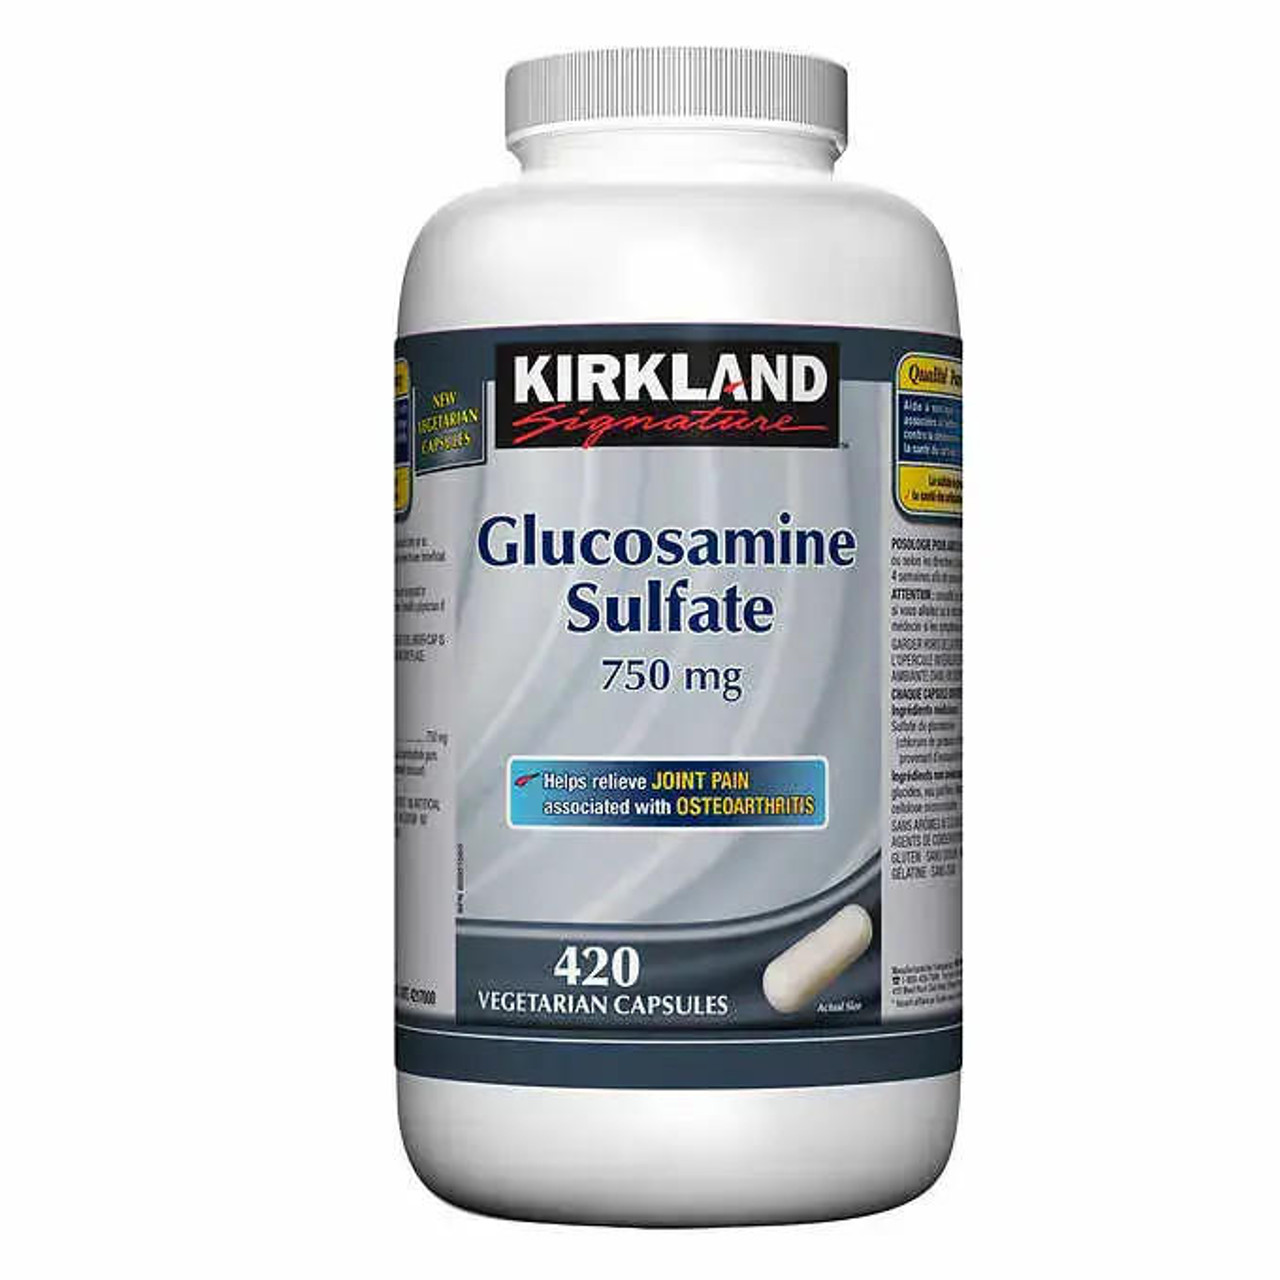  Kirkland Signature Glucosamine Sulfate 750 mg - 420 Vegetarian Capsules | Joint Health Support 